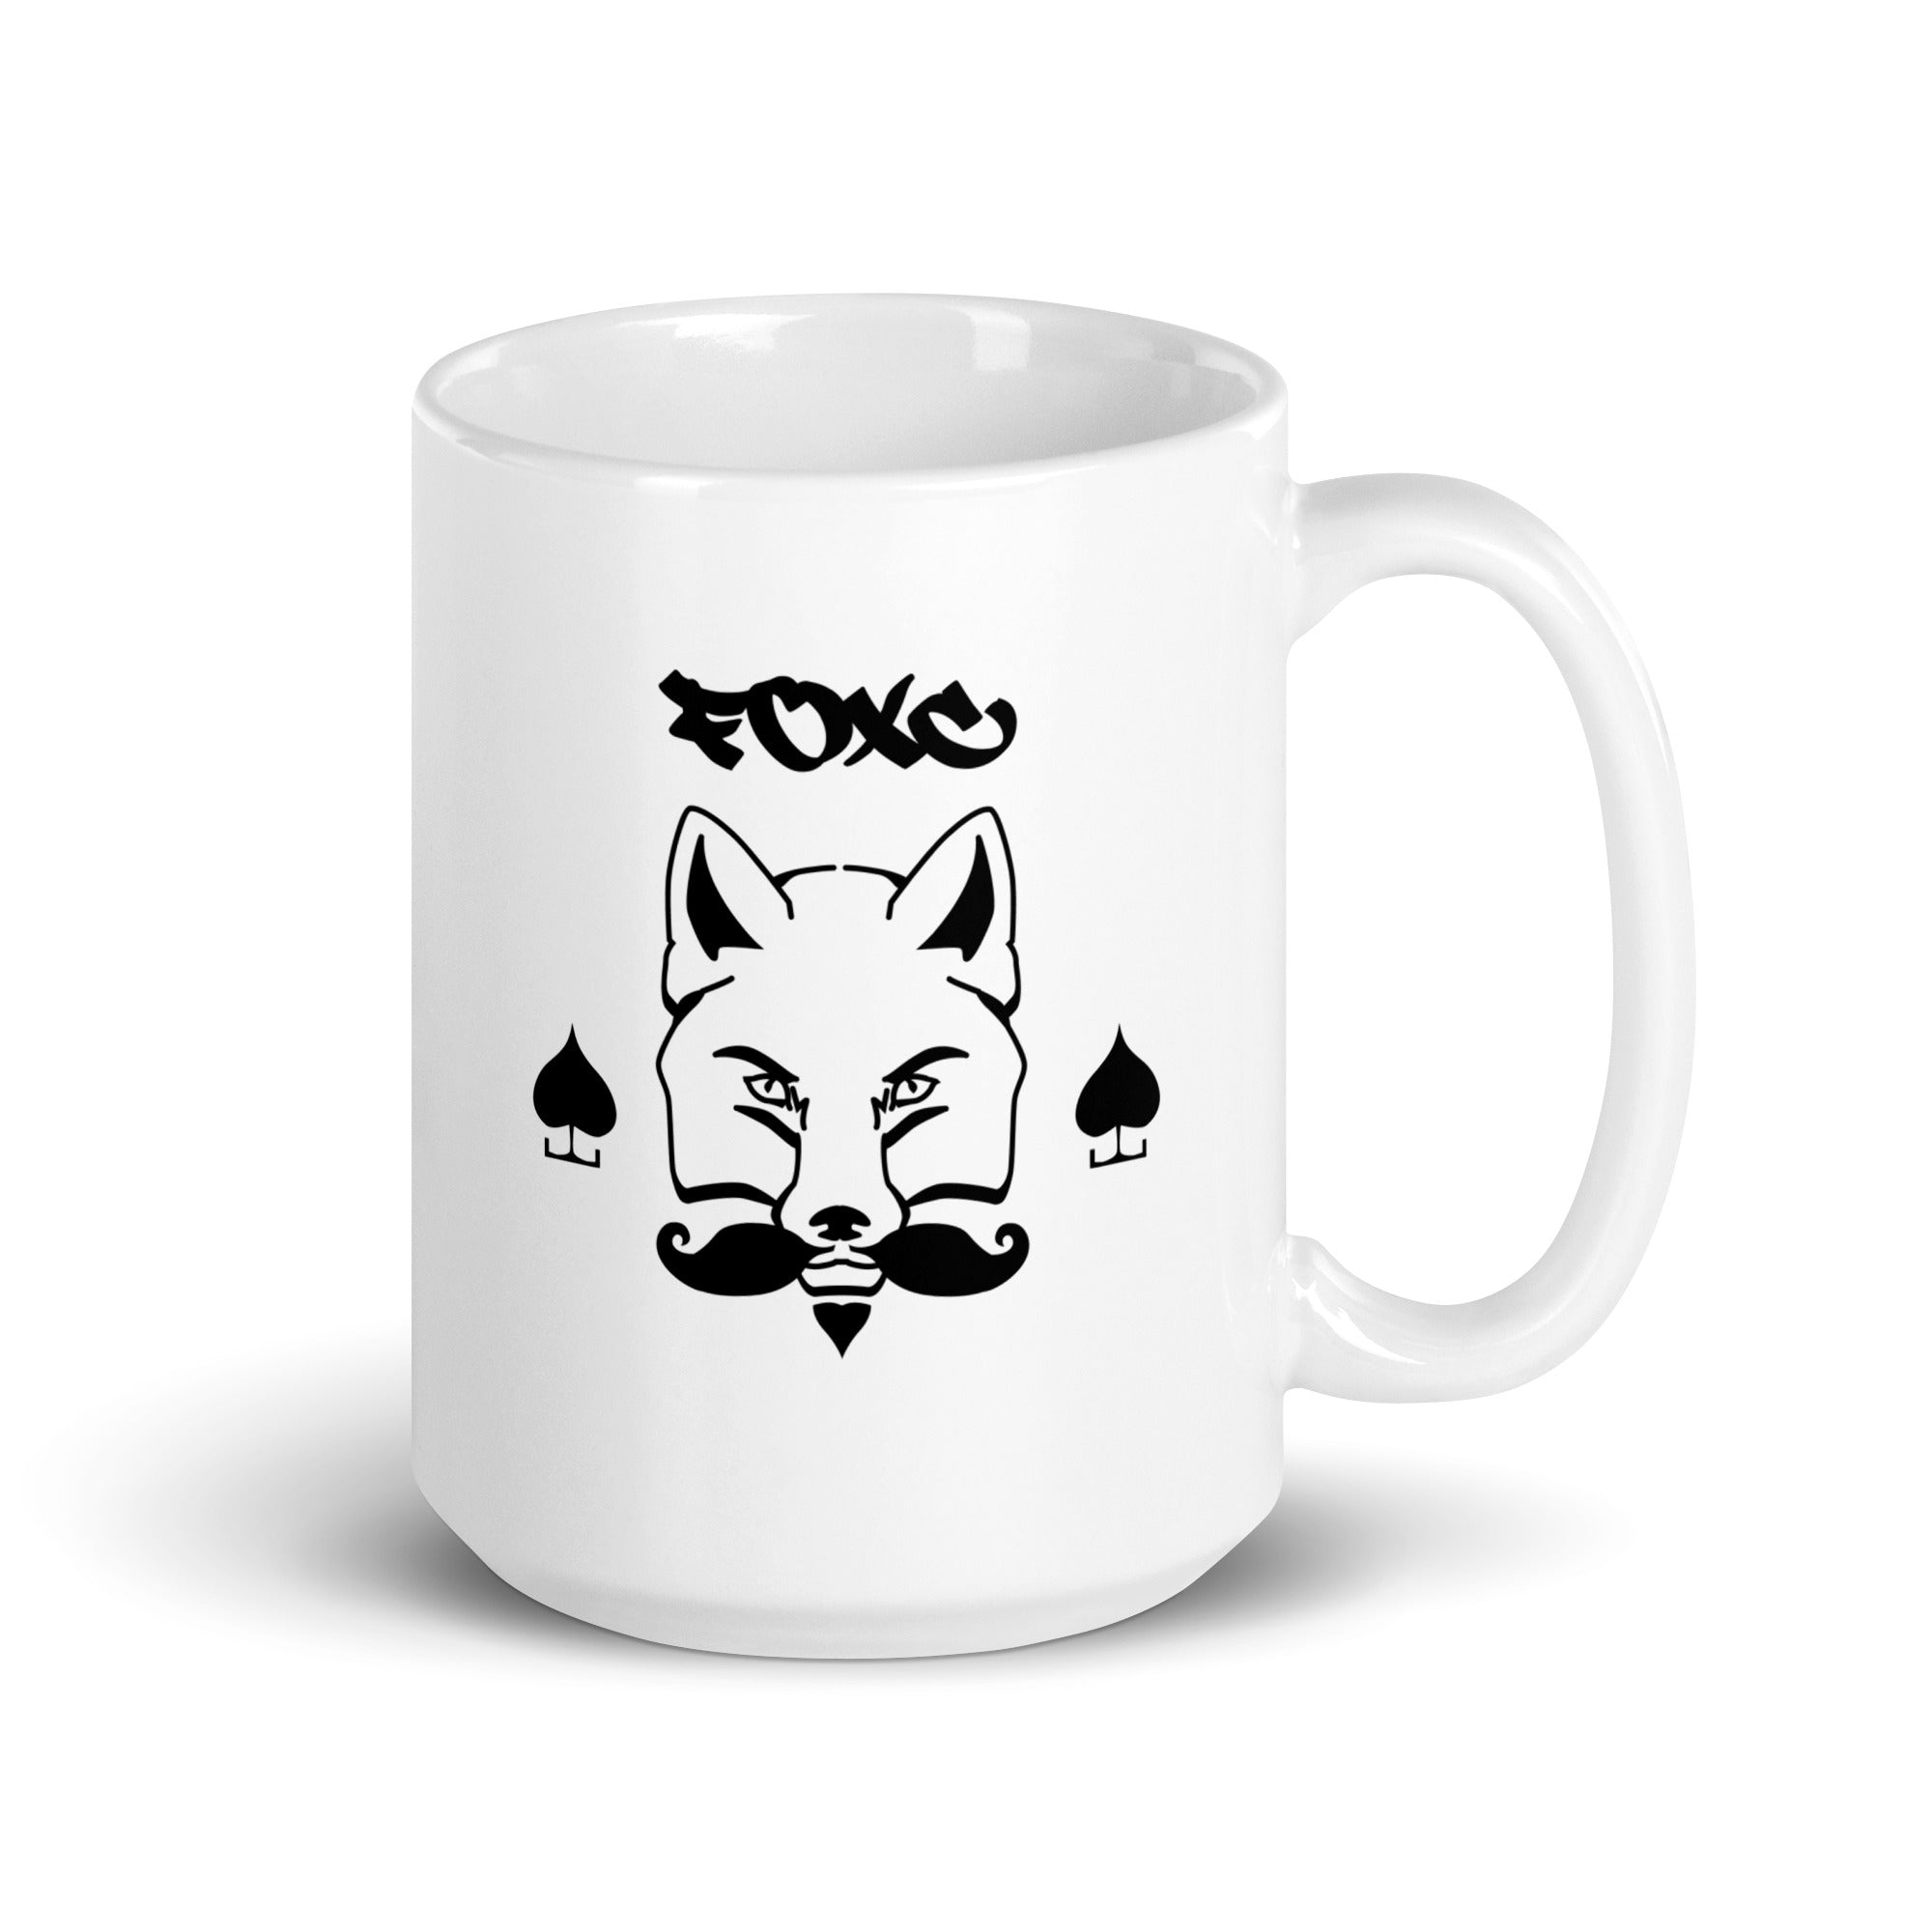 FOXC Tattoo Mug